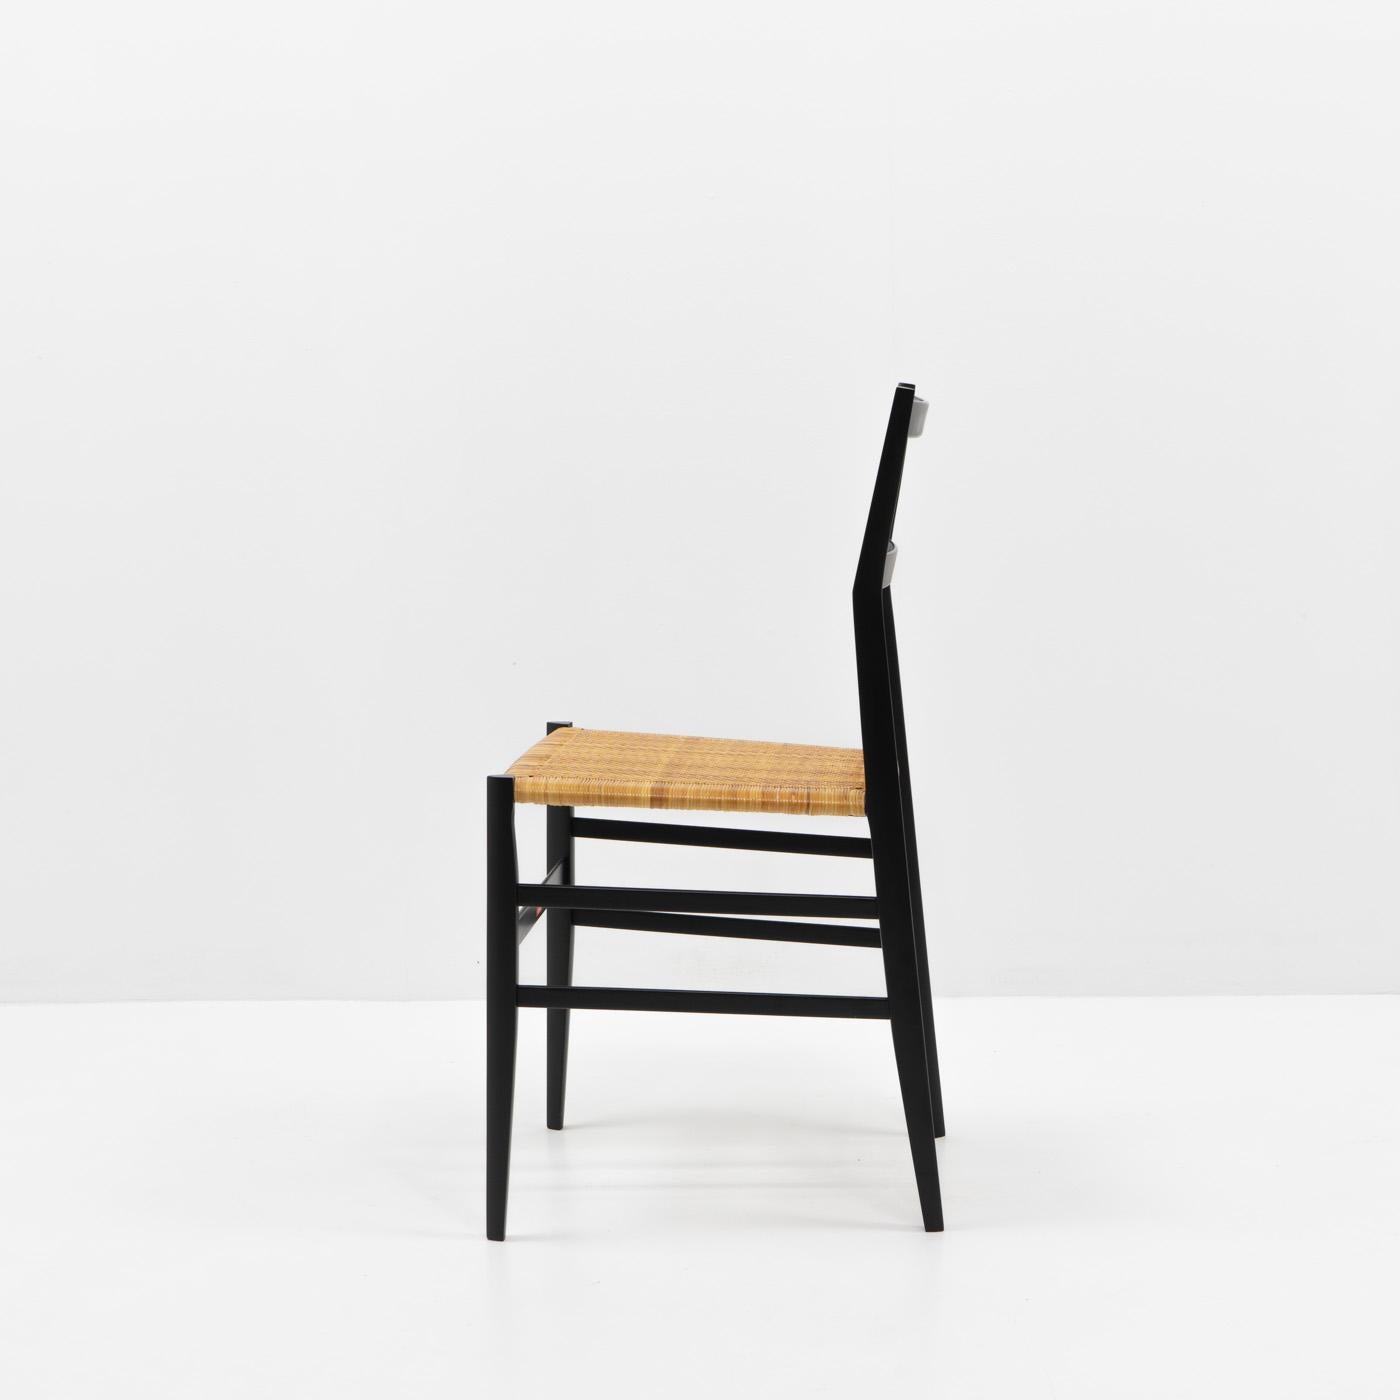 Italian Design Classic Gio Ponti, Superleggera Chair, Cassina, 2000s For Sale 4